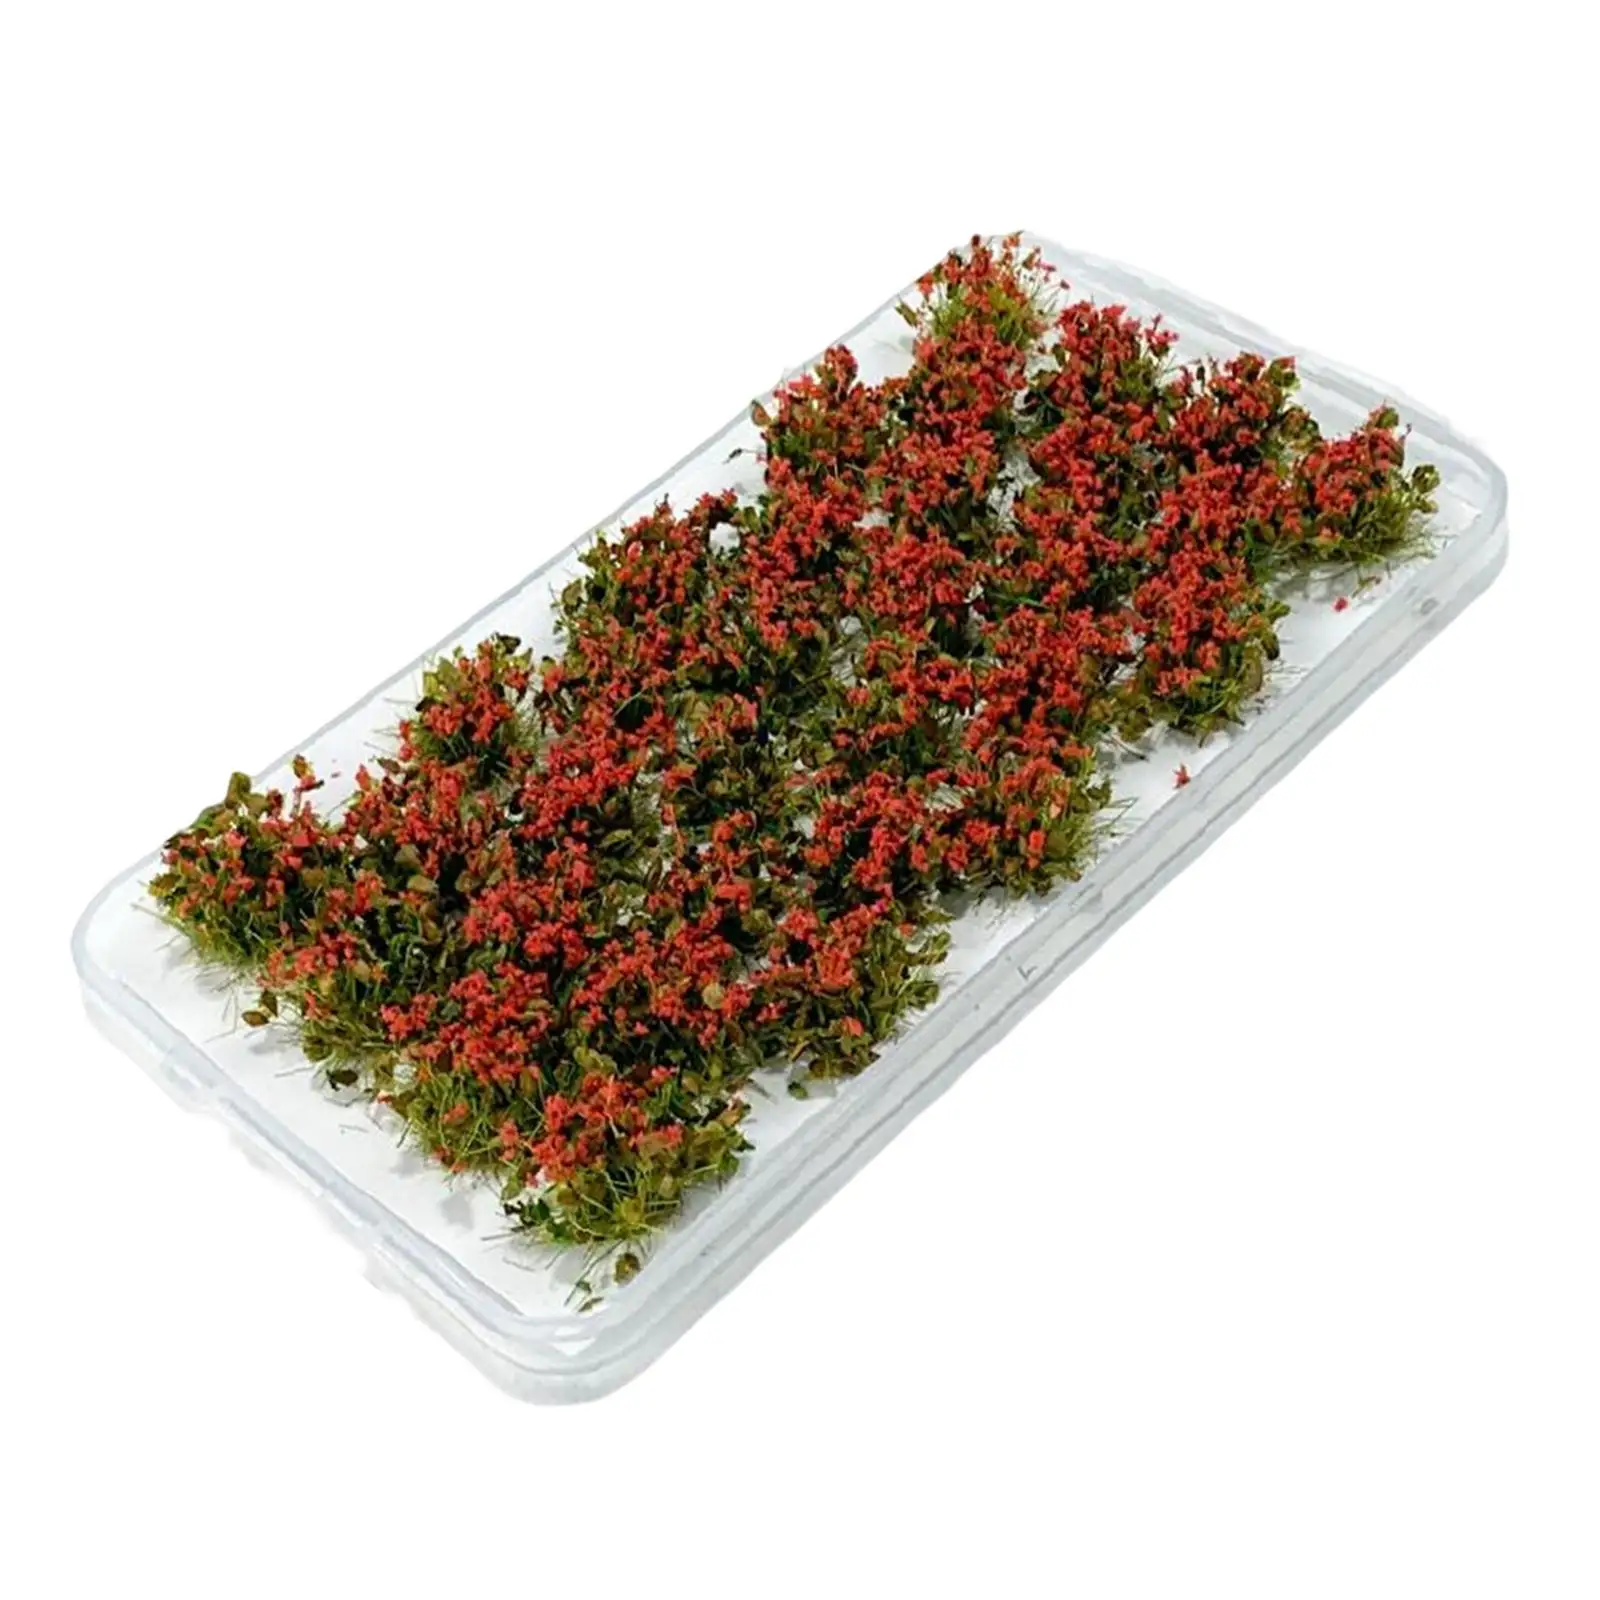 32 Pieces Micro Landscape Miniature Flower Static Model for Architecture Building Model Railroad Scenery Sand Table Decor